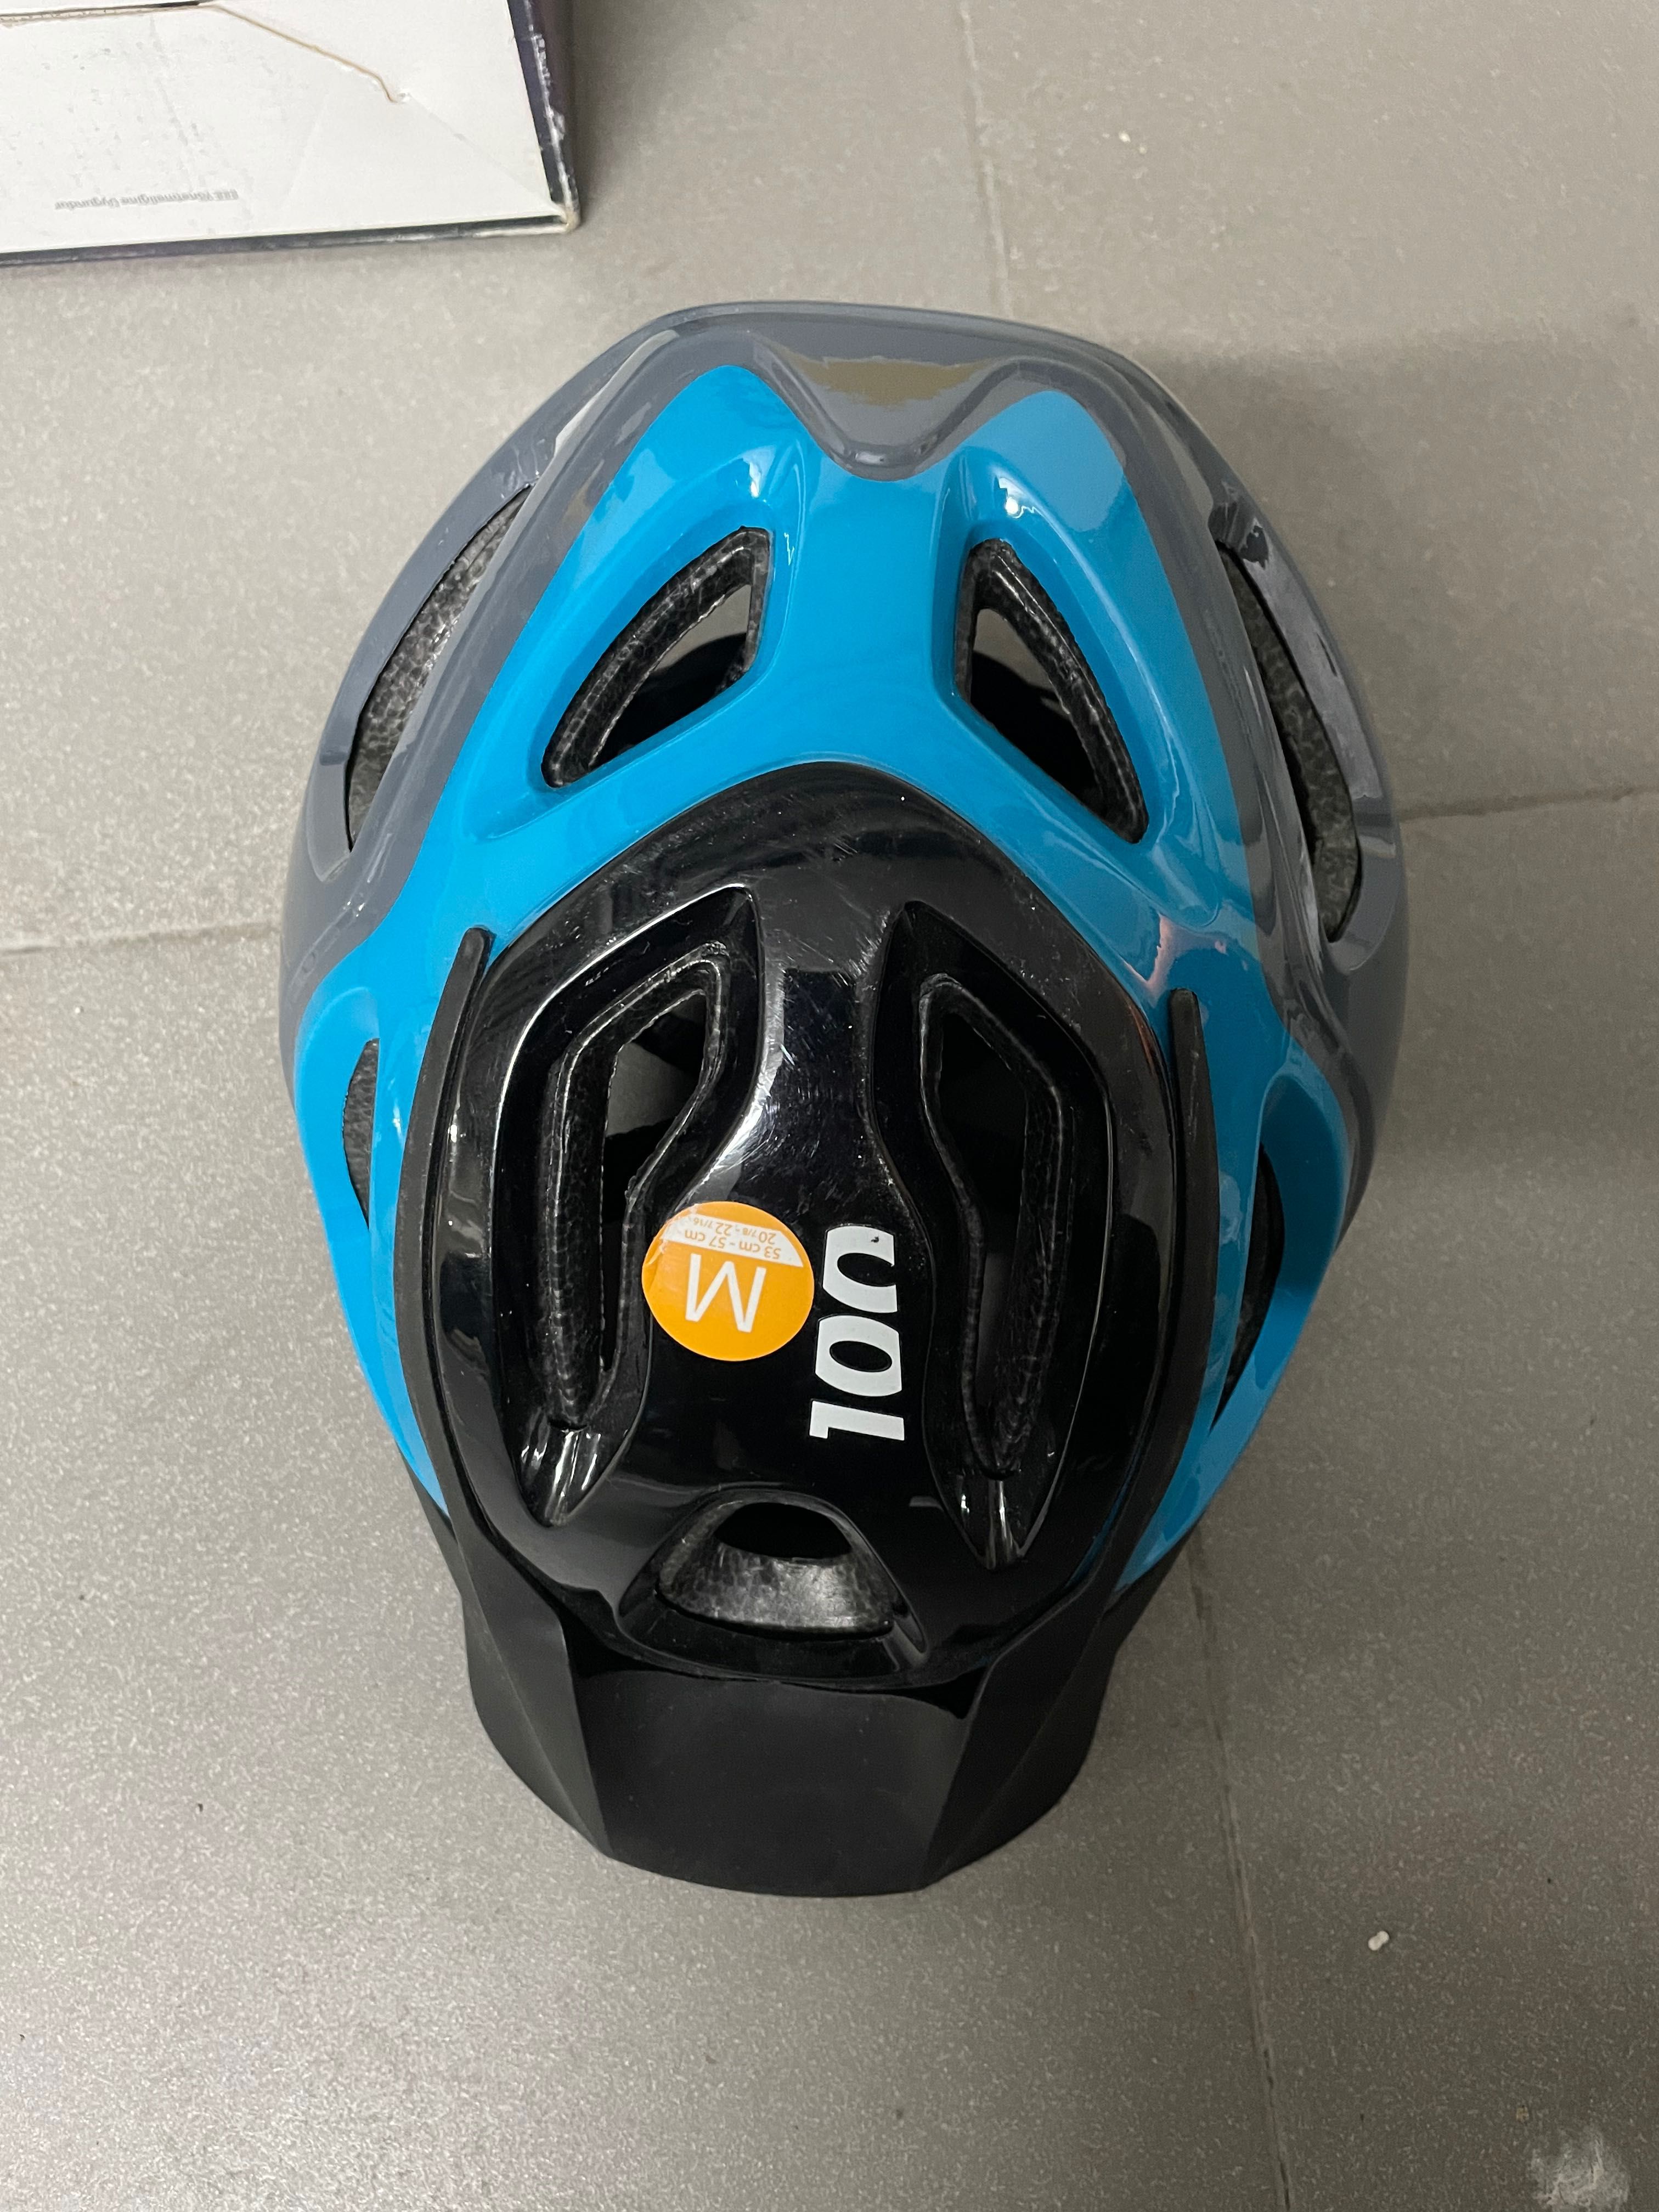 Vendo capacete para bicicleta tamanho M